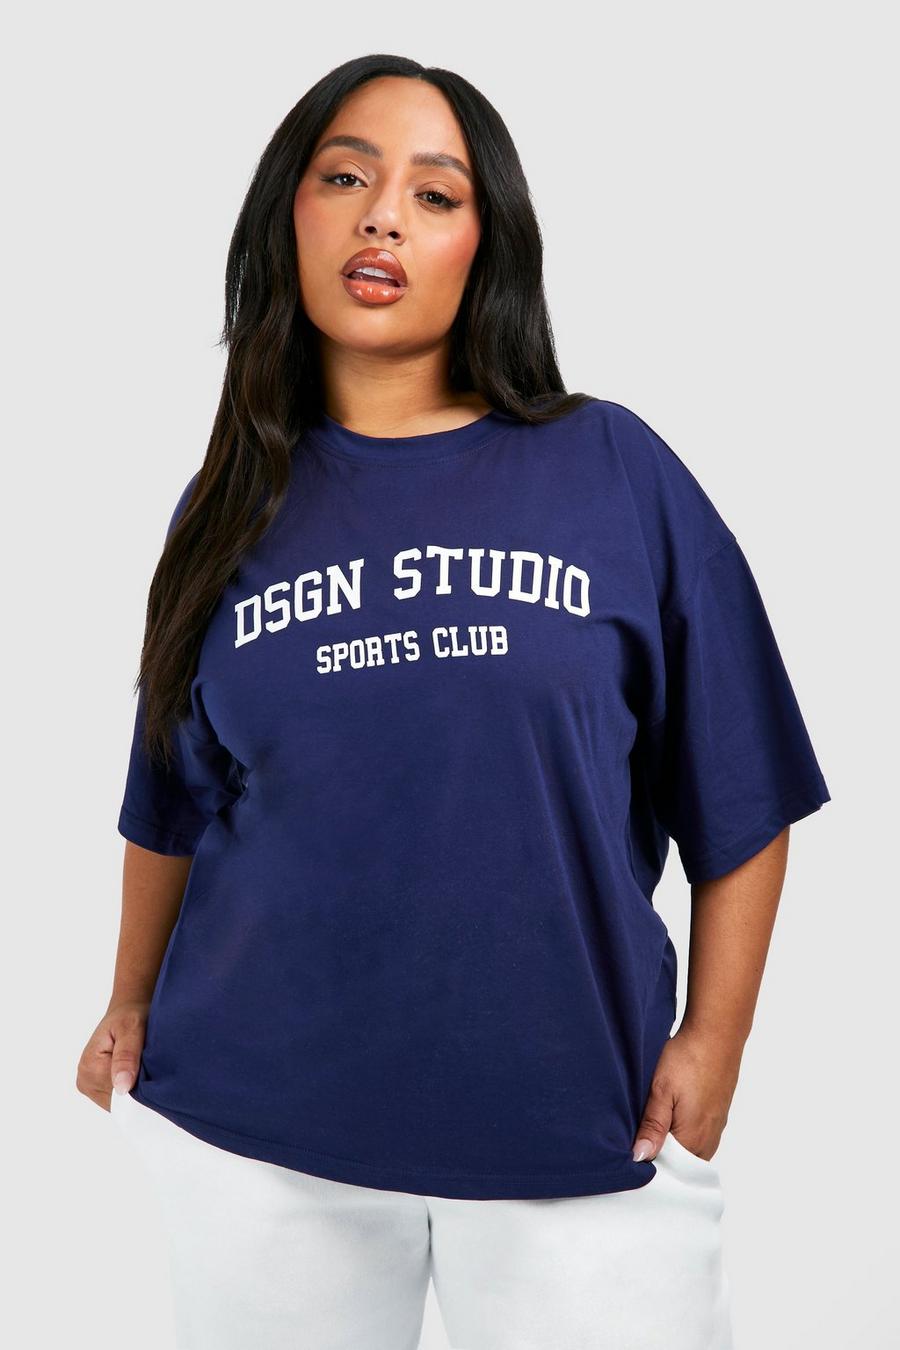 Plus Oversize T-Shirt mit Dsgn Studio Sports Club Print, Navy image number 1